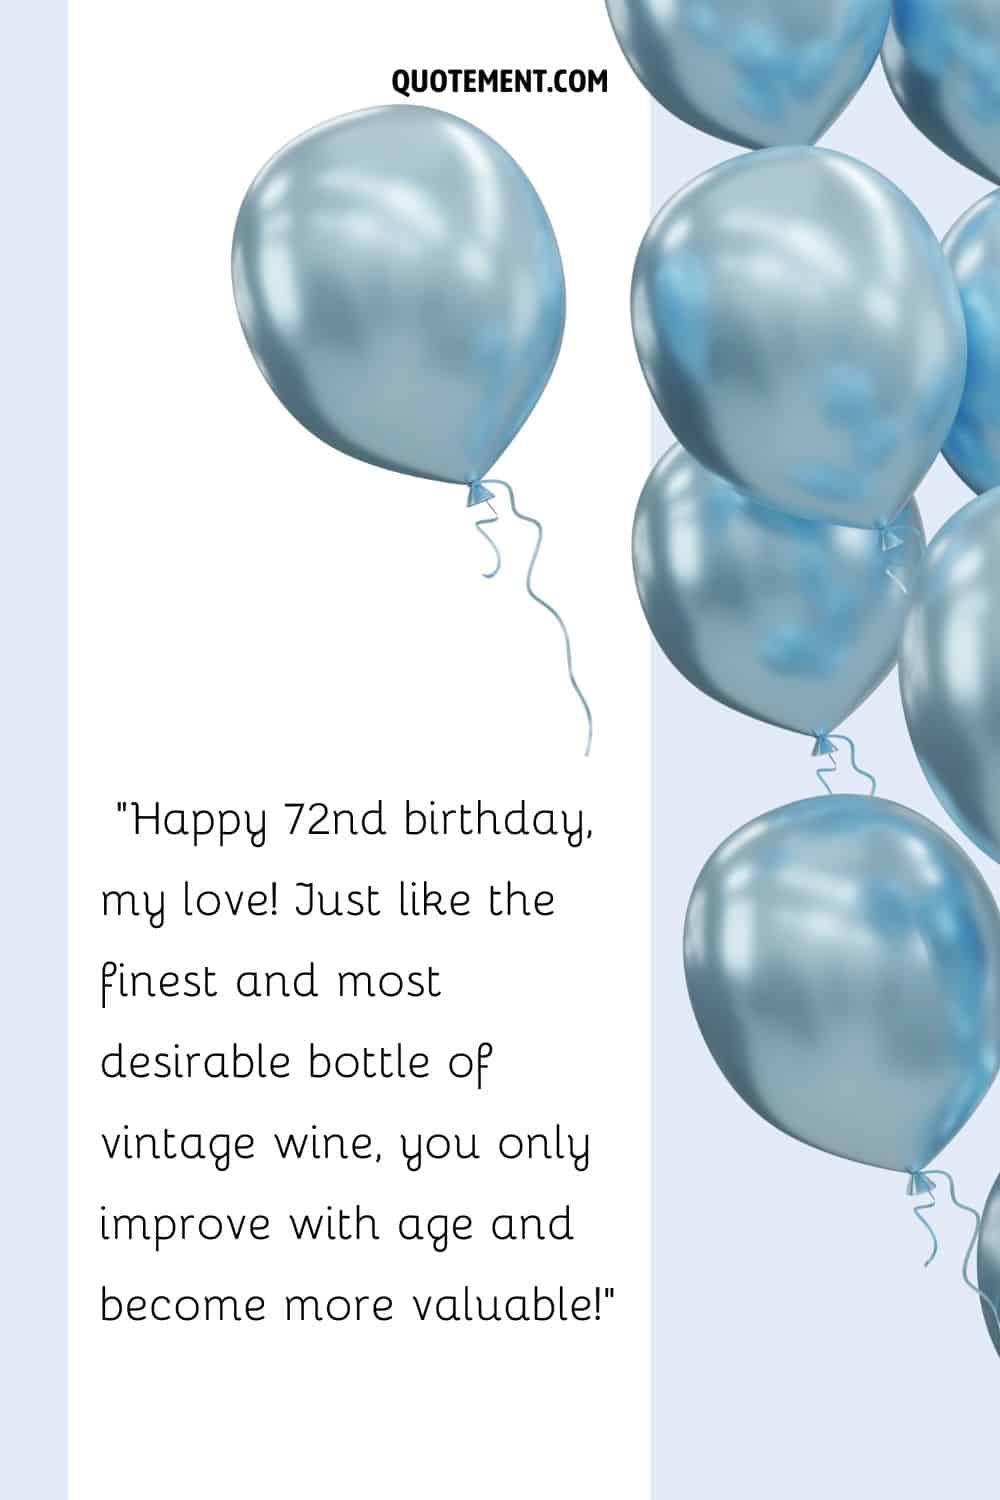 brillantes globos azules que representan un dulce deseo de cumpleaños para mi maridito